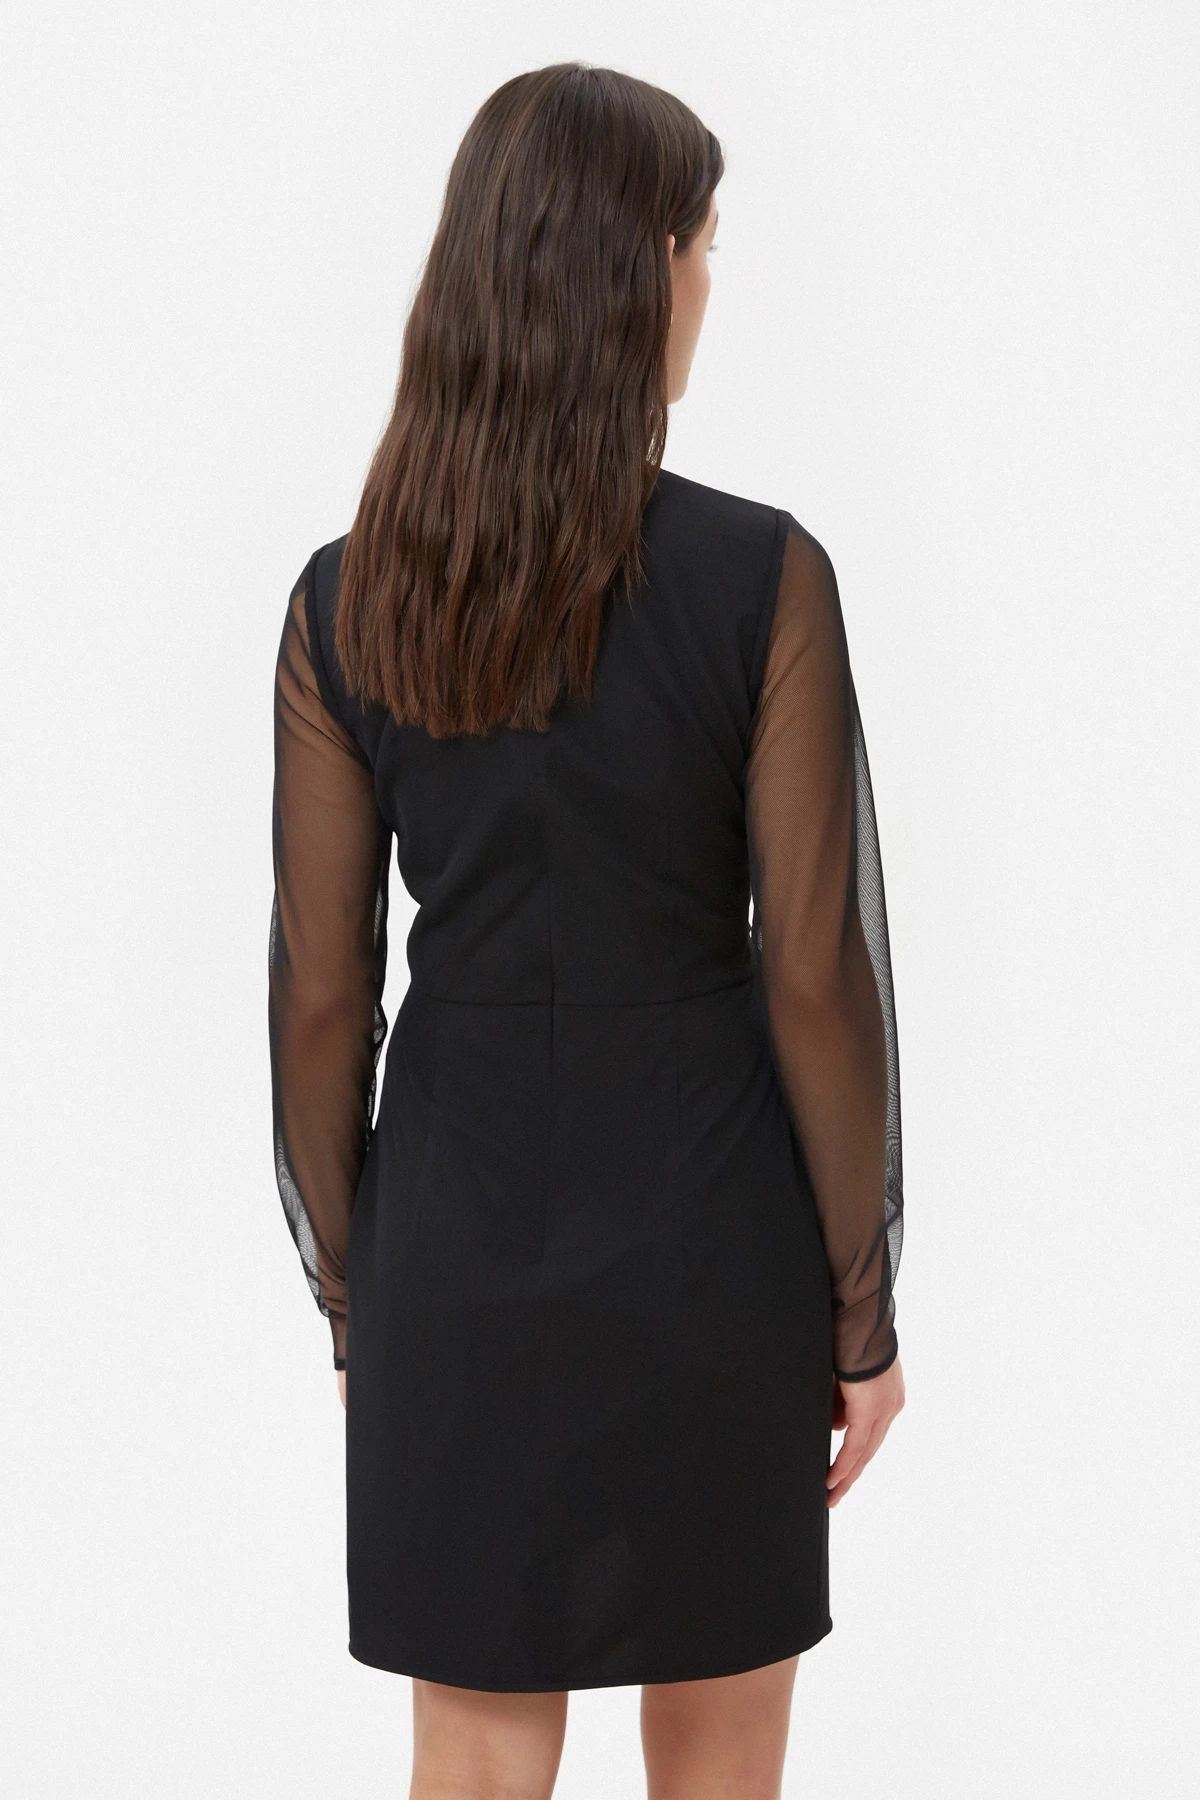 Short black mesh dress, photo 4